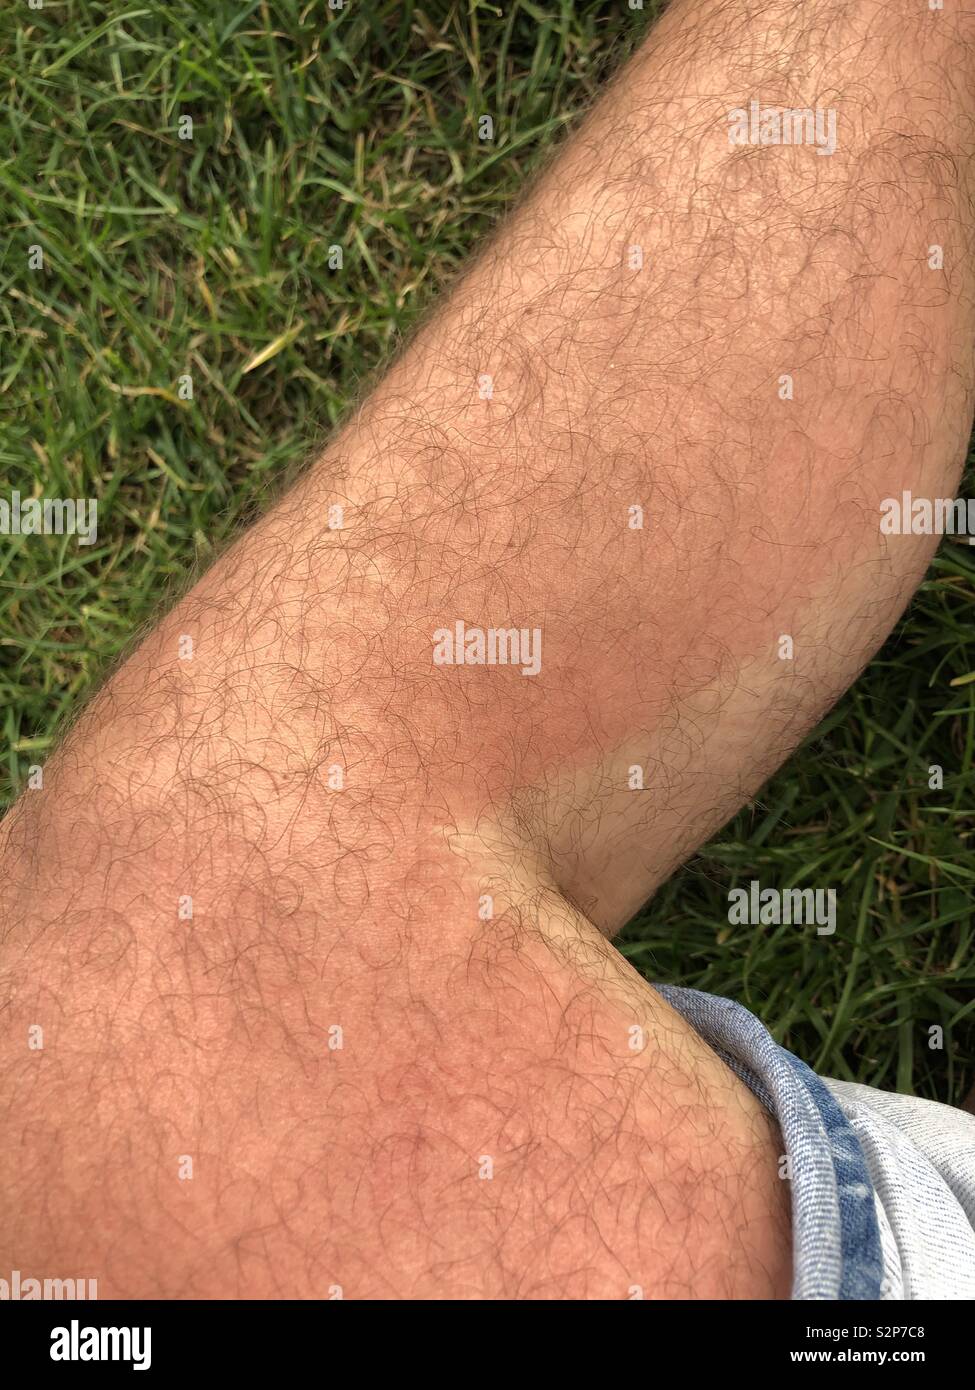 Sunburnt leg of a male Stock Photo